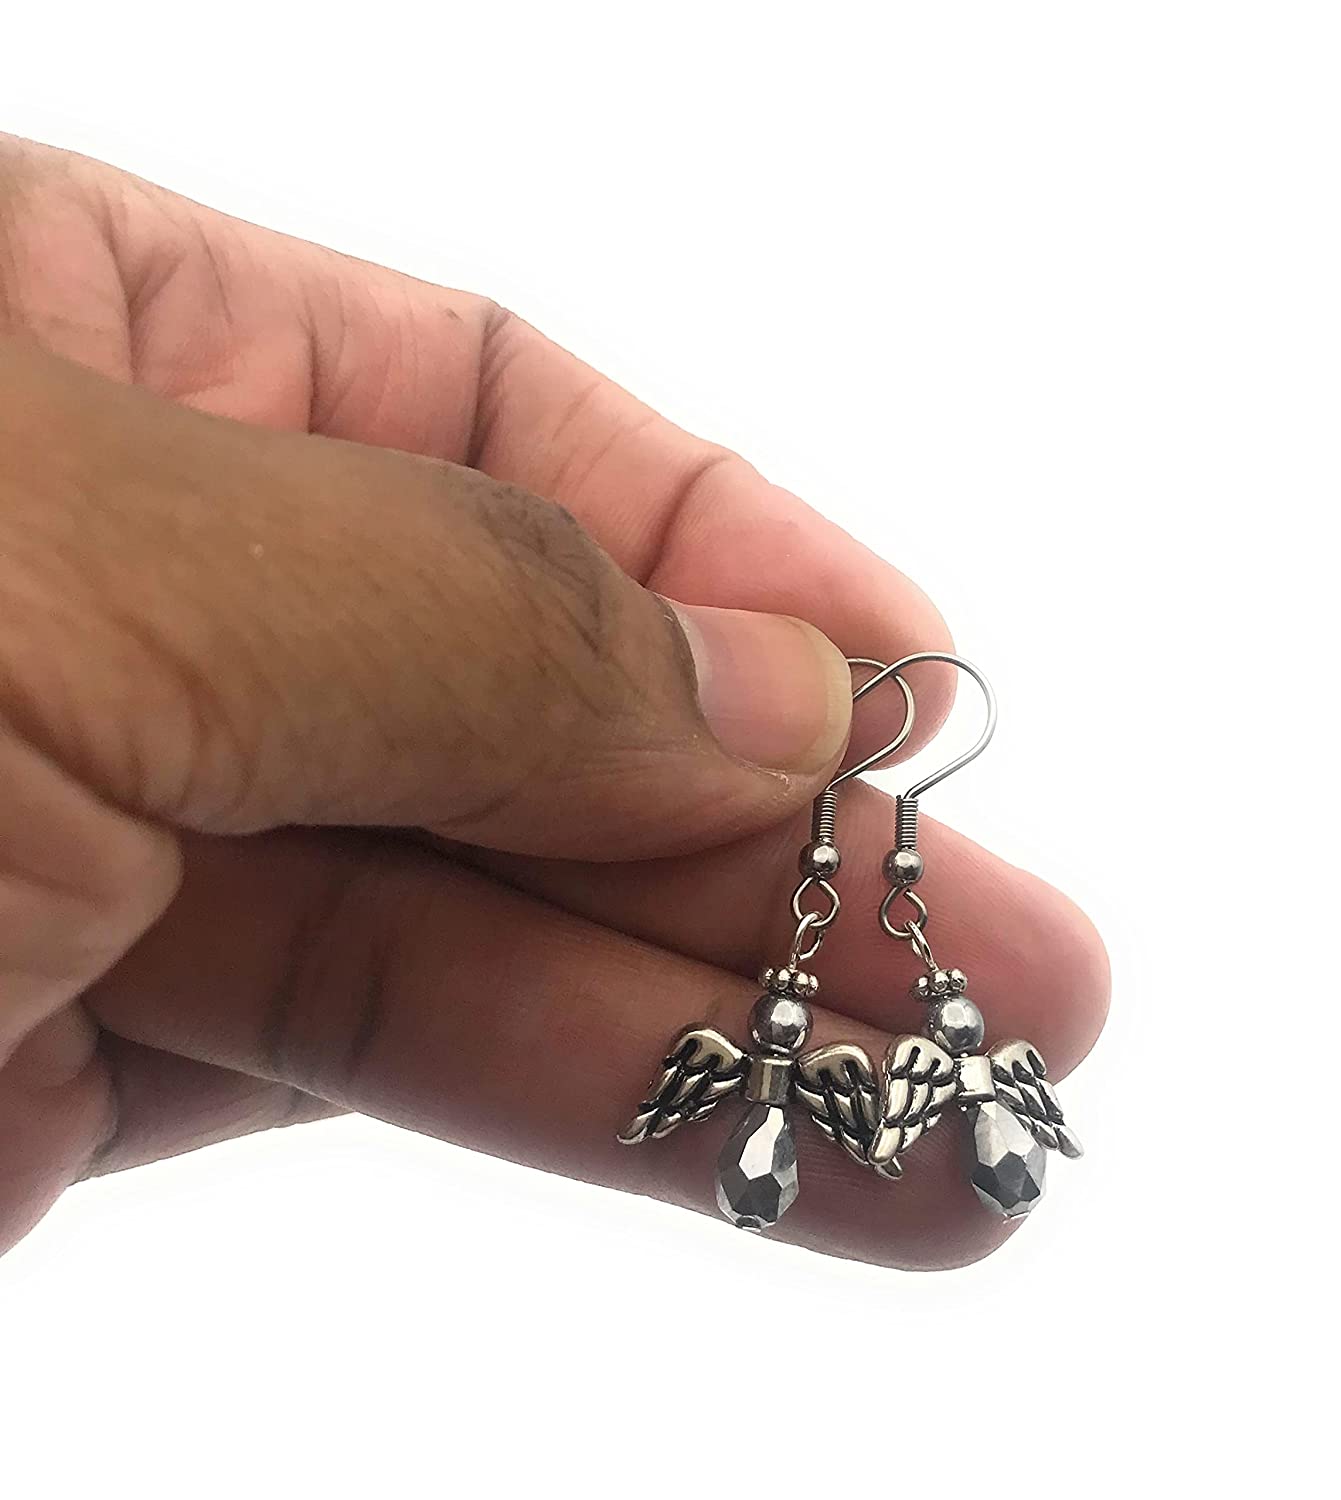 Silver Crystal Angel Dangle Earrings Dangling from Finger Tips from Scott D Jewelry Designs